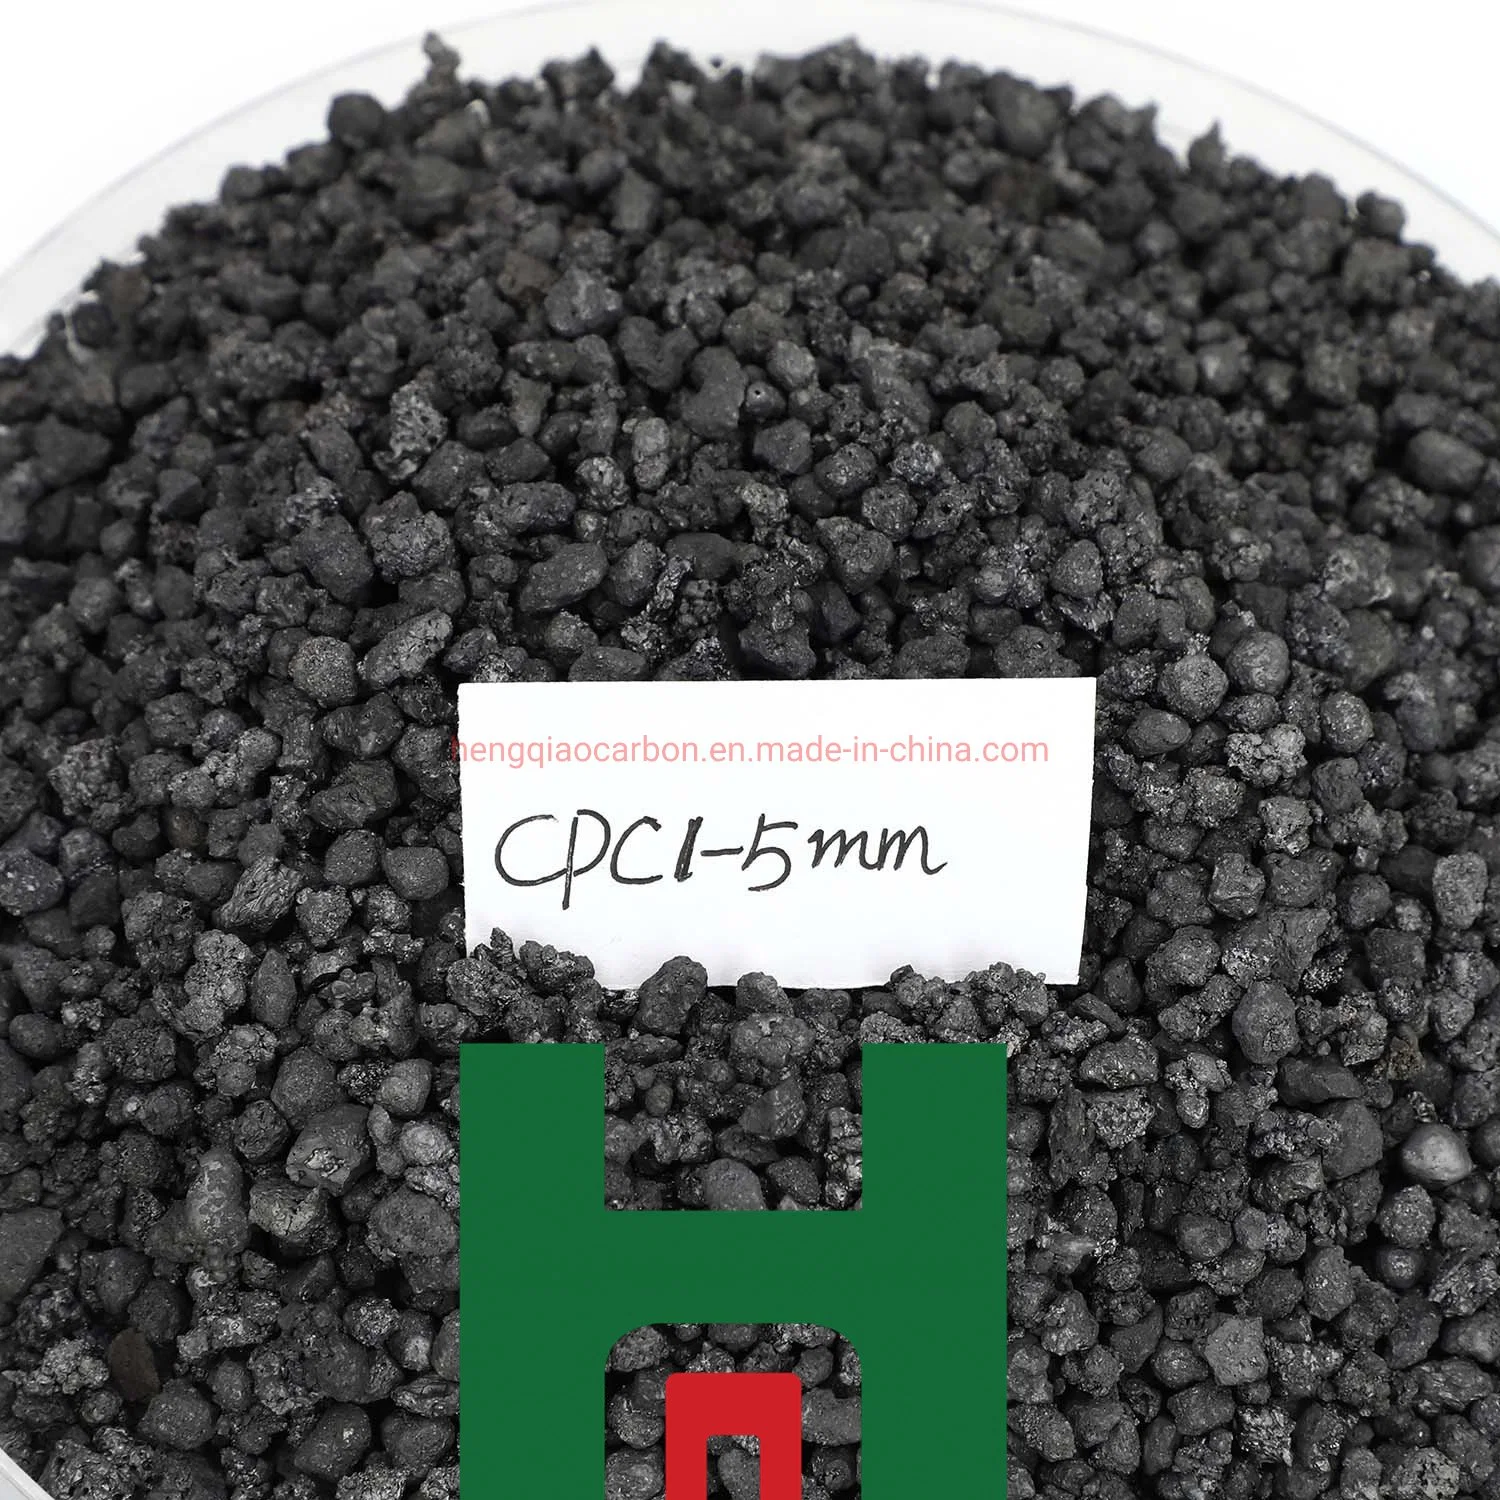 High Low Sulphur Carbon Additive Calcined Pet Coke Recarburizer